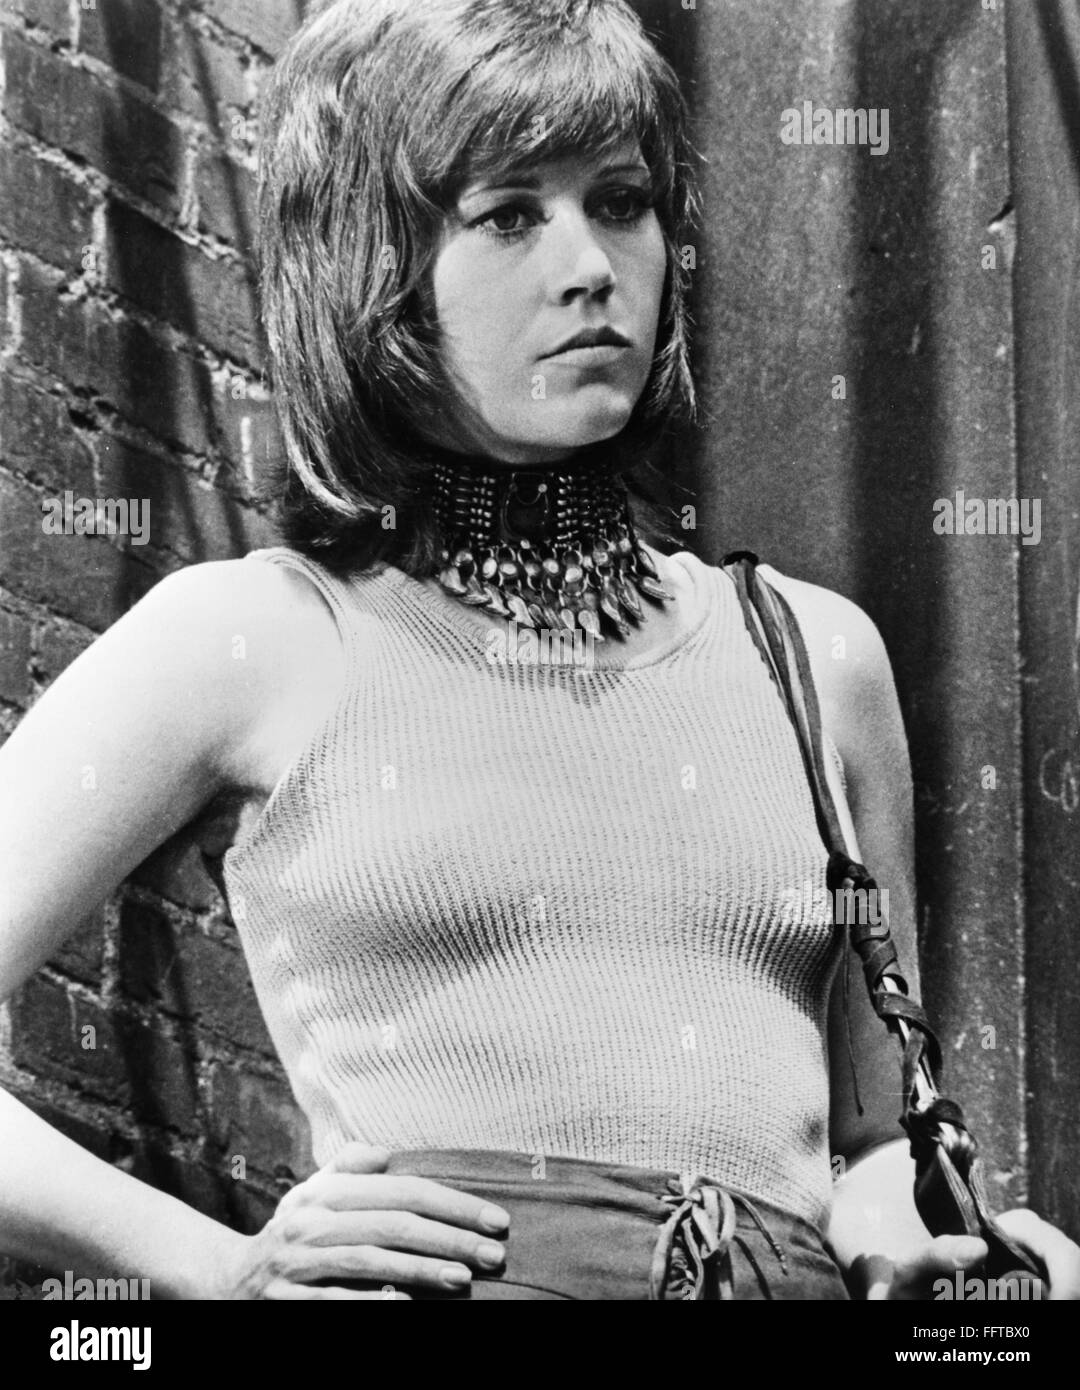 FILM: KLUTE, 1971. /nJane Fonda as Bree Daniels in 'Klute' directed by ...